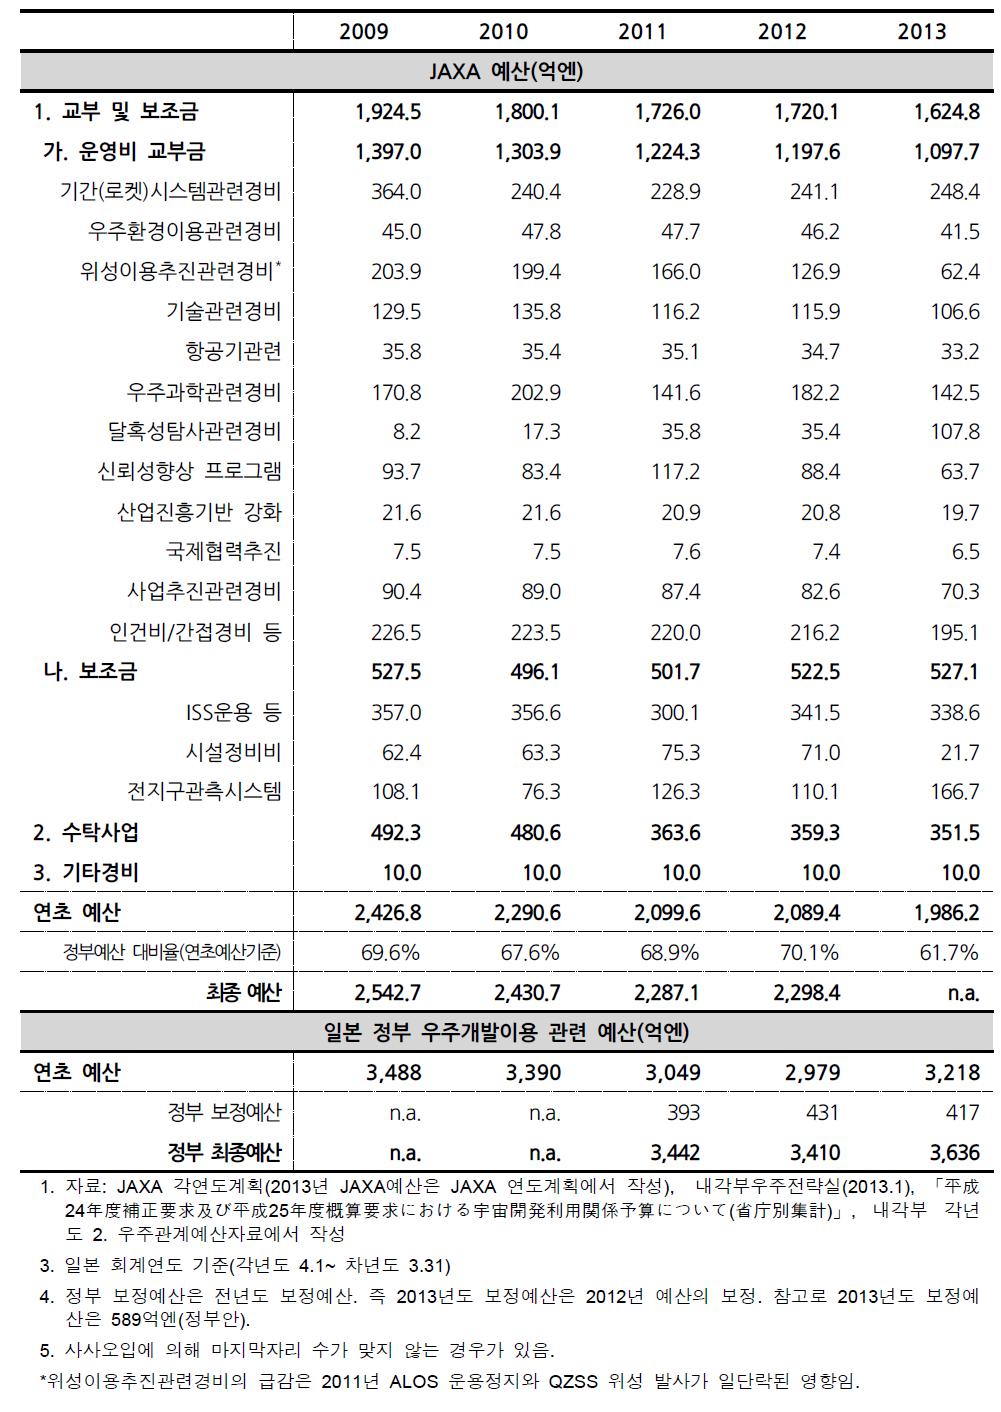 JAXA의 예산 추이(2009~2013)